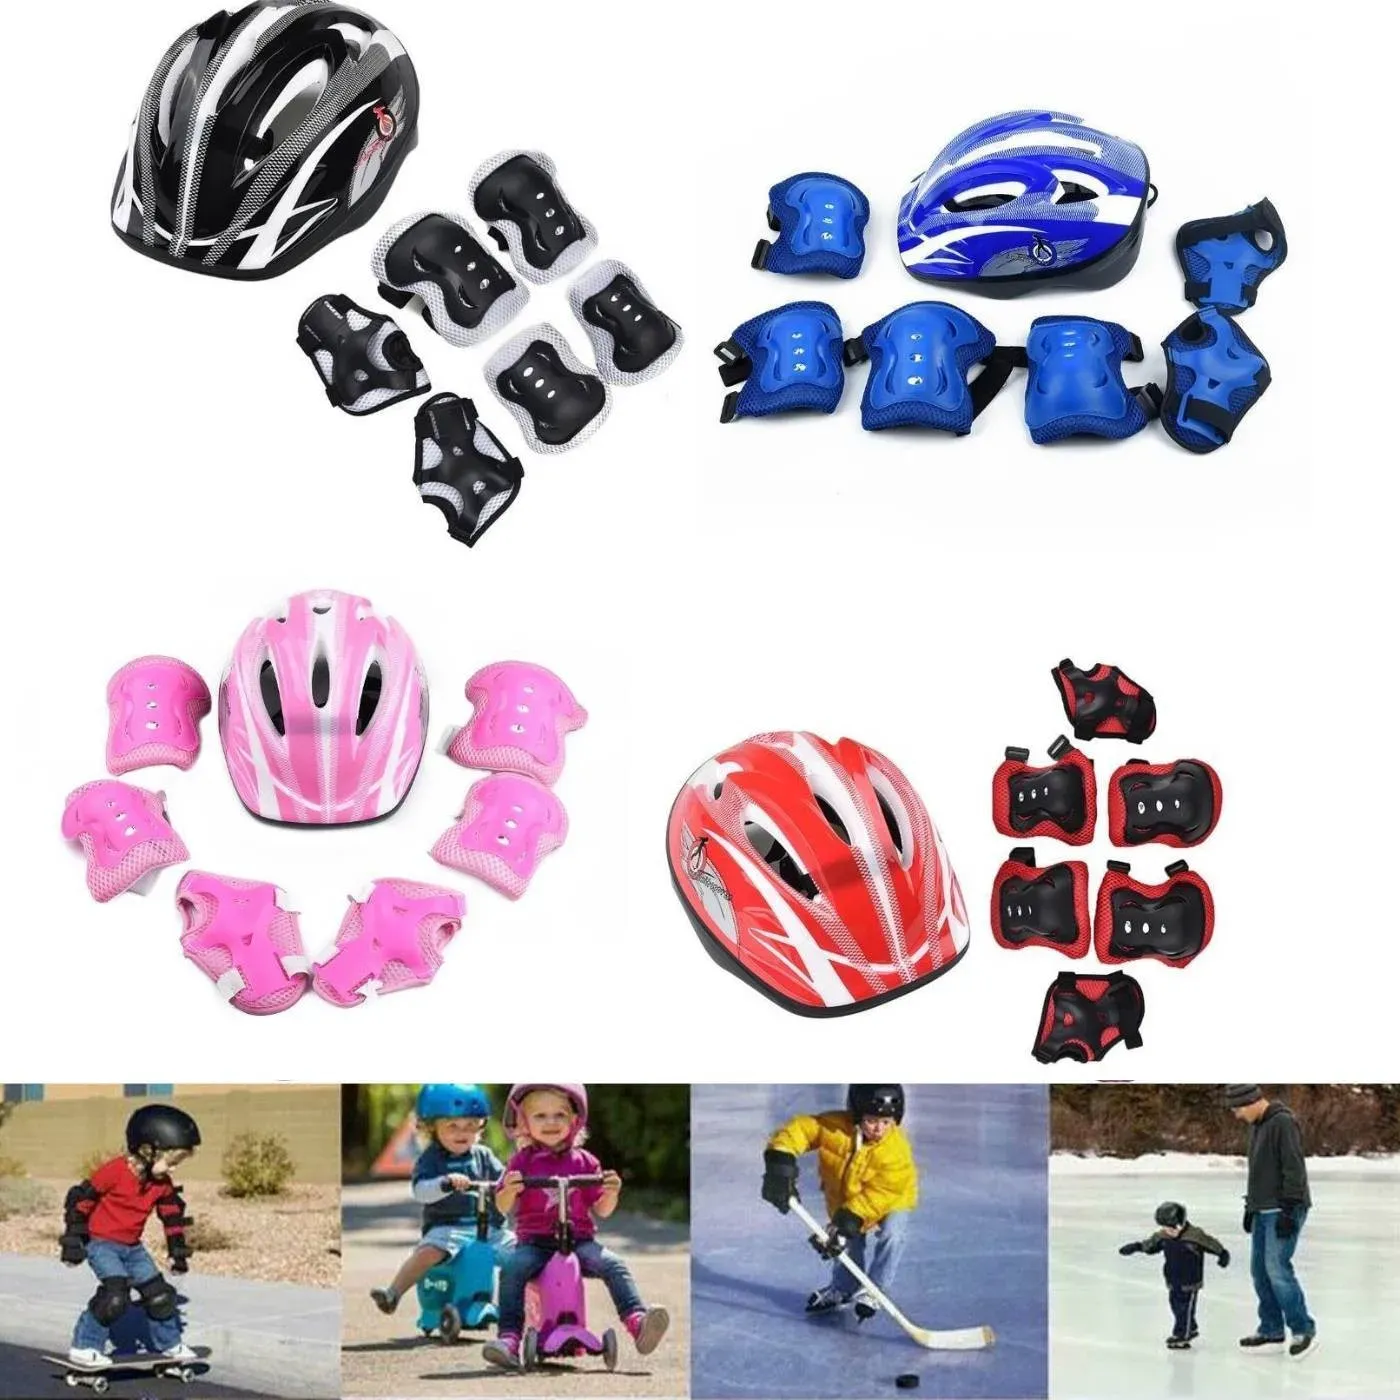 Placa 7 Set Kid Roller Skining Bike Helmet Kit Kit Pad Pad para 515 crianças Skateboarding Racing Protetive Parts